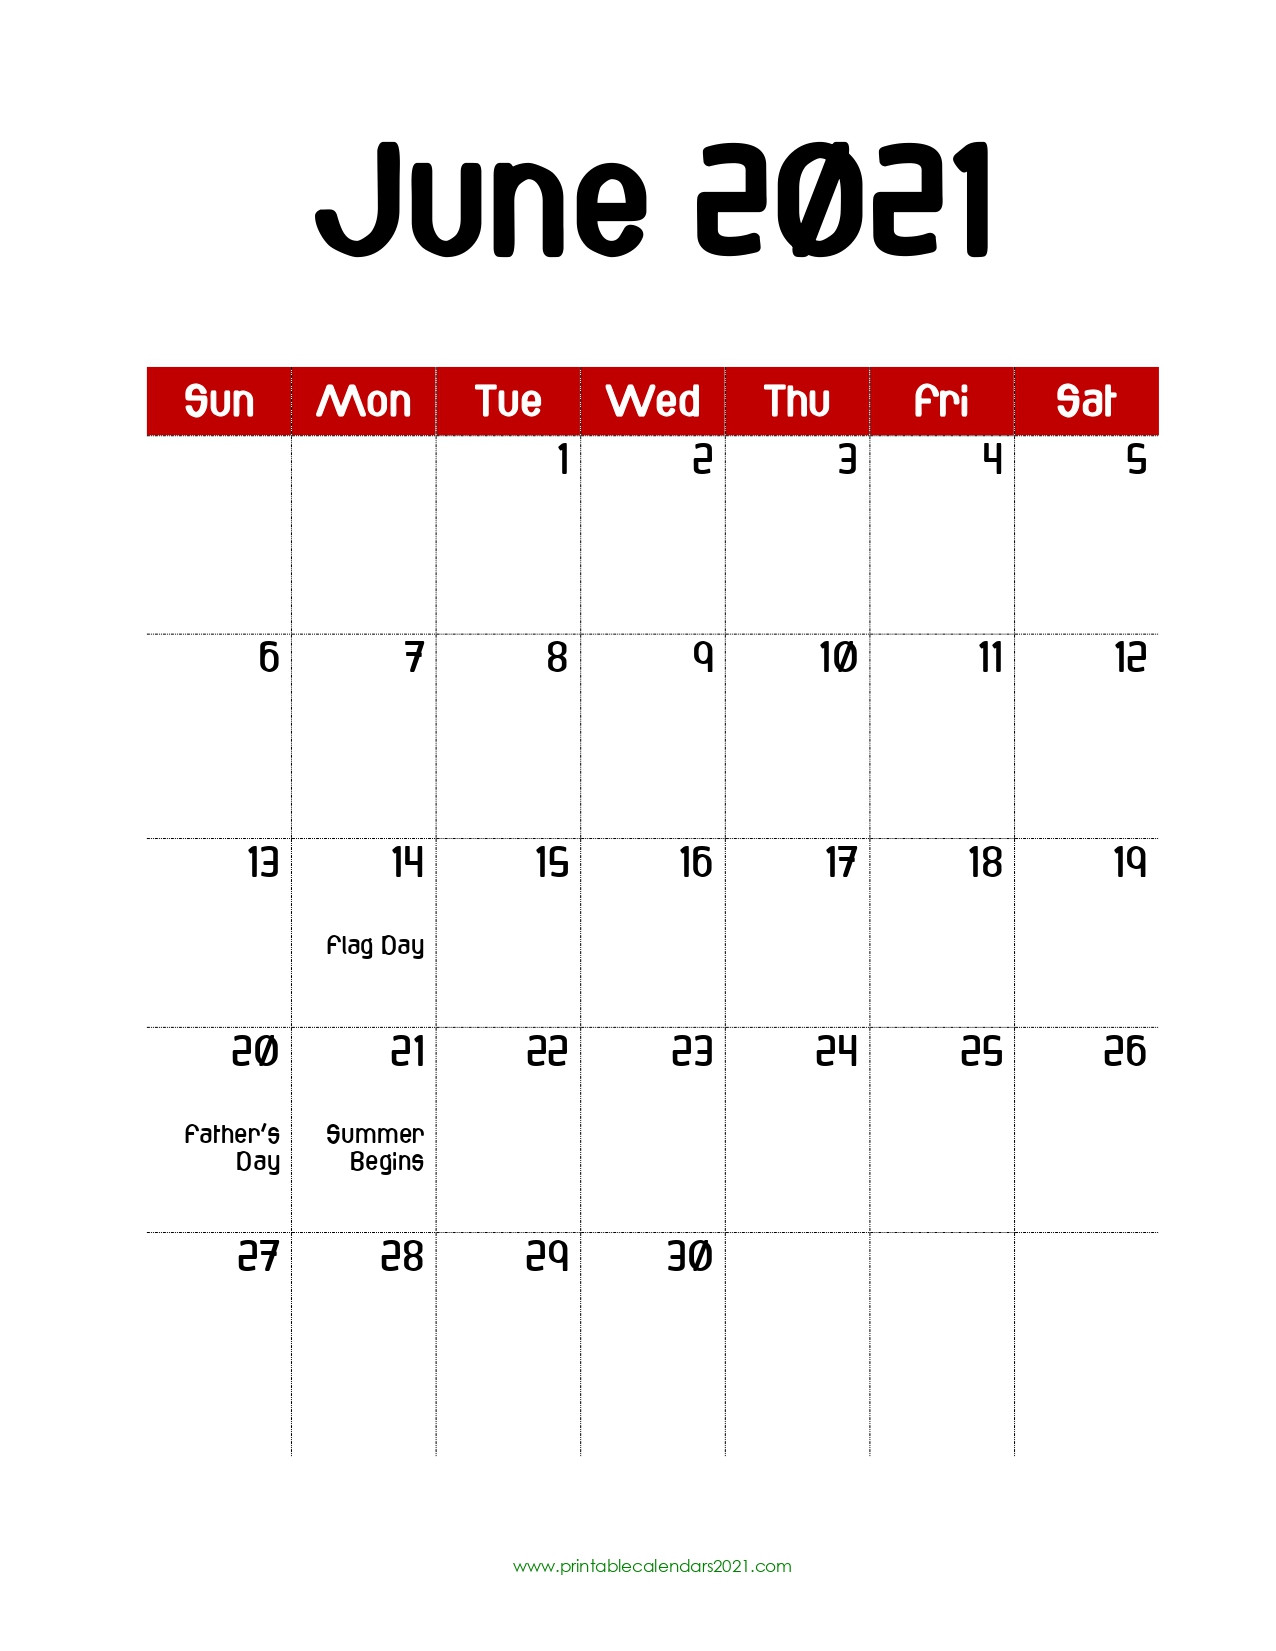 60+ Free June 2021 Calendar Printable With Holidays, Blank-June 2021 Calendar